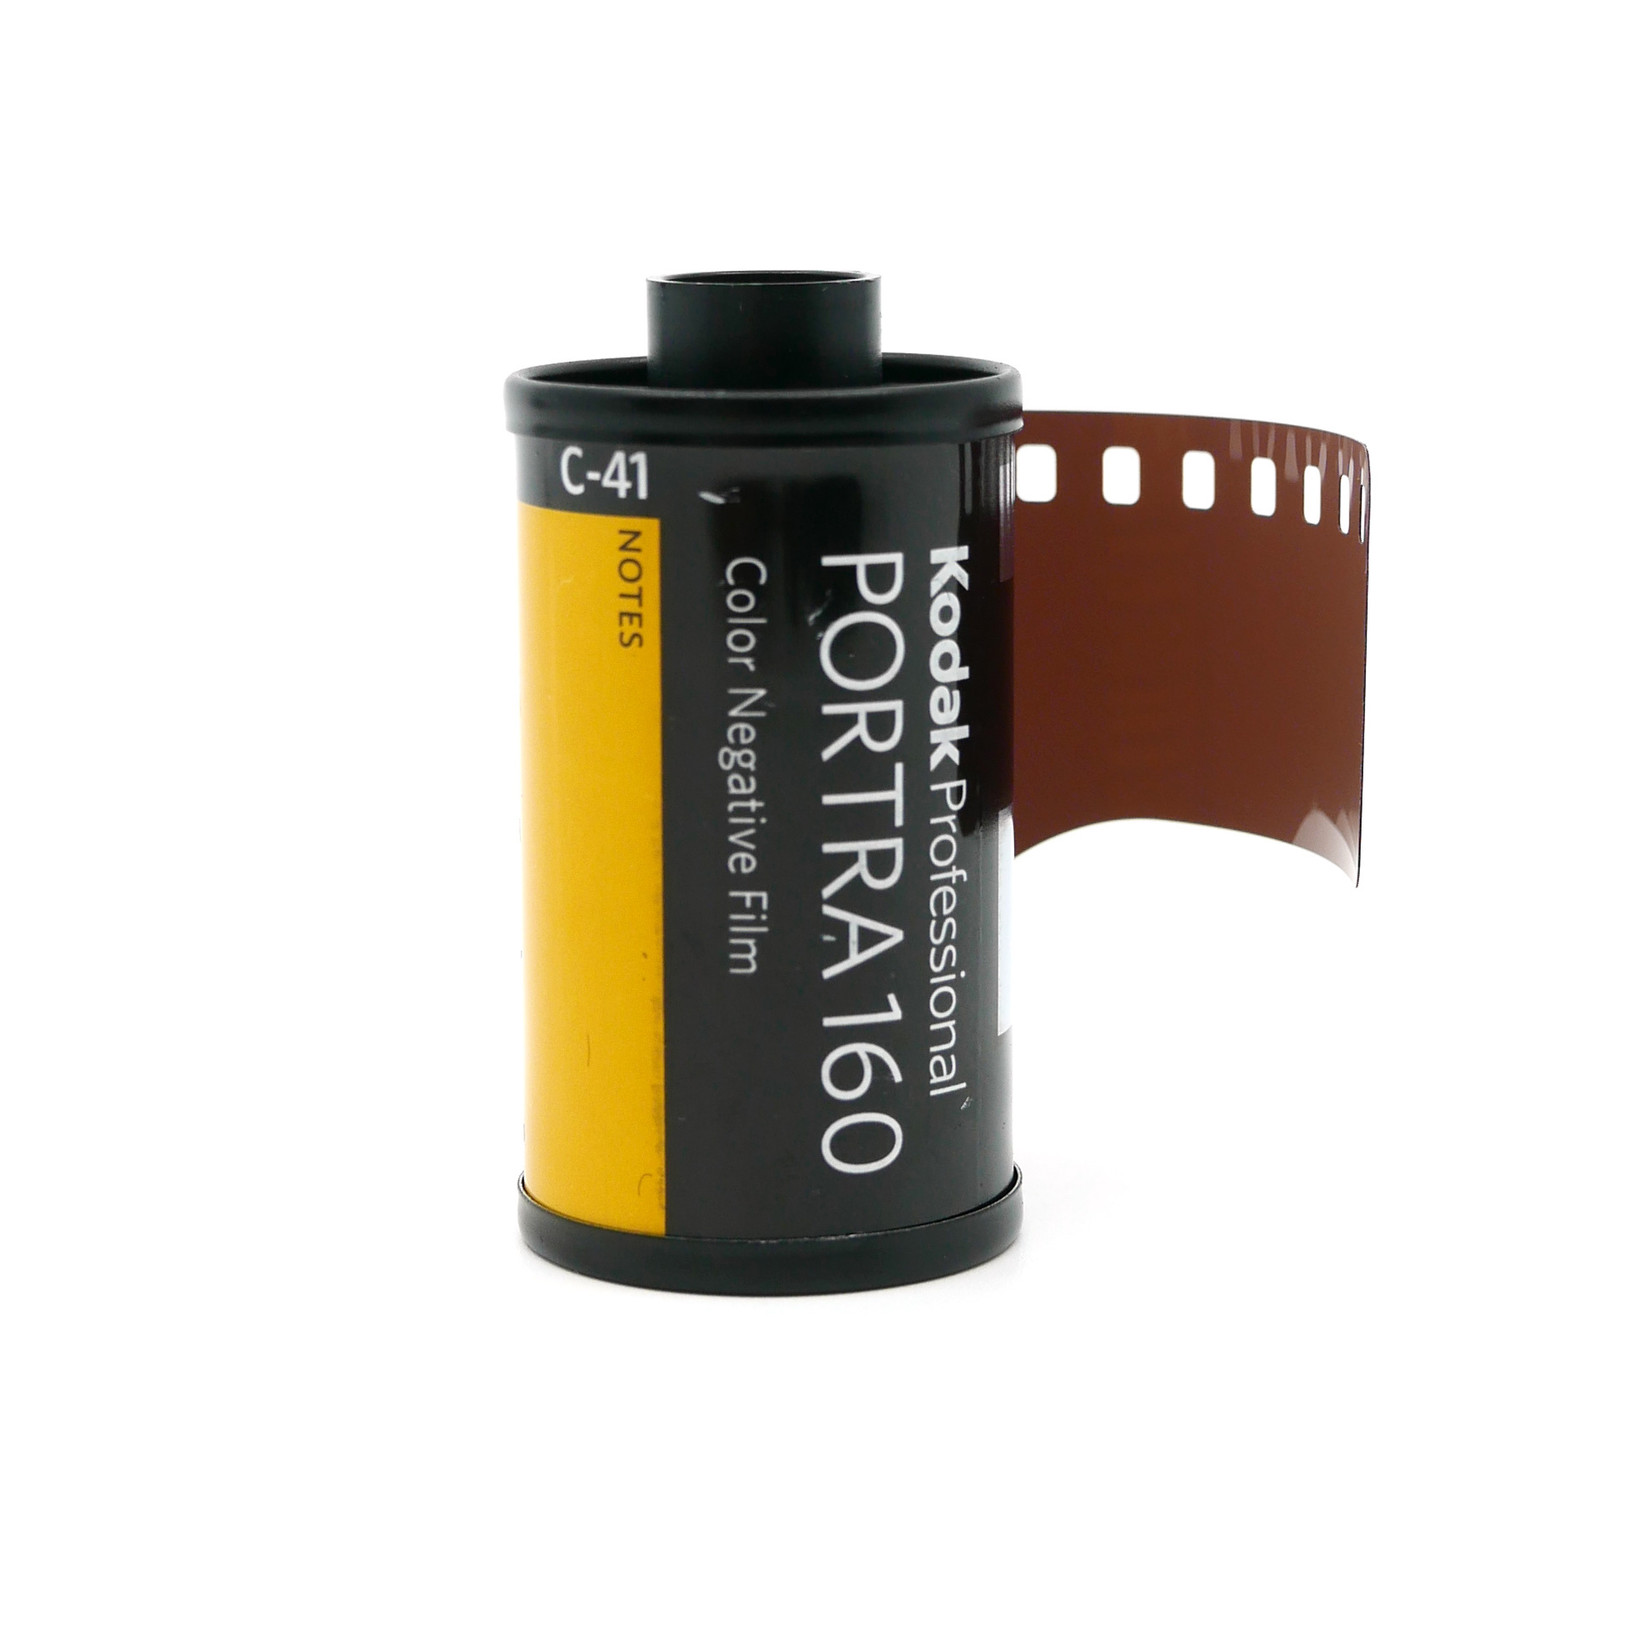 Kodak Kodak Portra 160 135-36